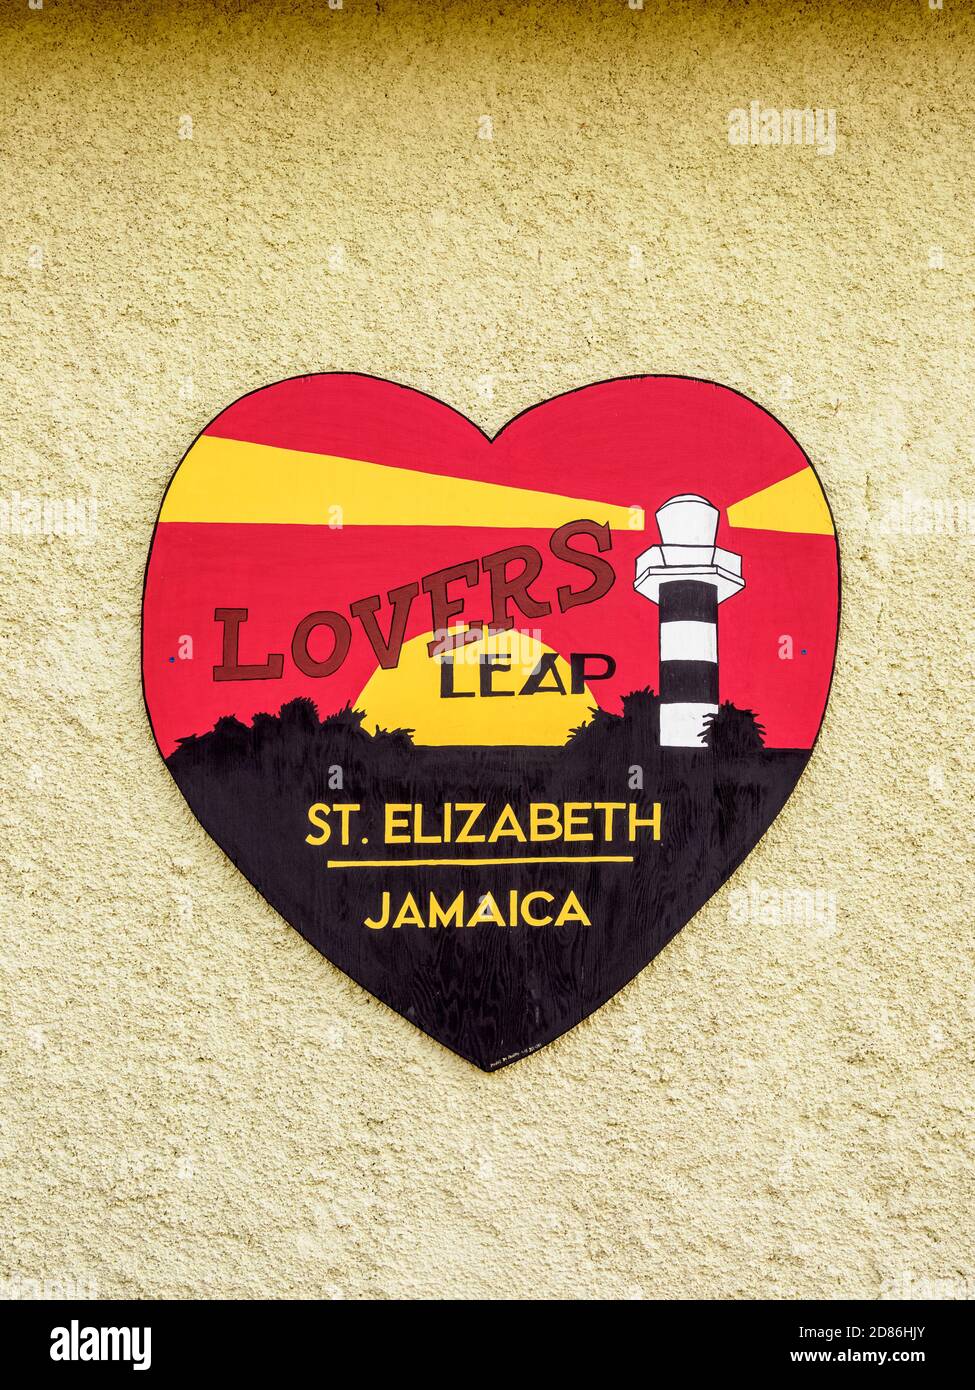 Lovers Leap Restaurant, detailed view, Saint Elizabeth Parish, Jamaica Stock Photo